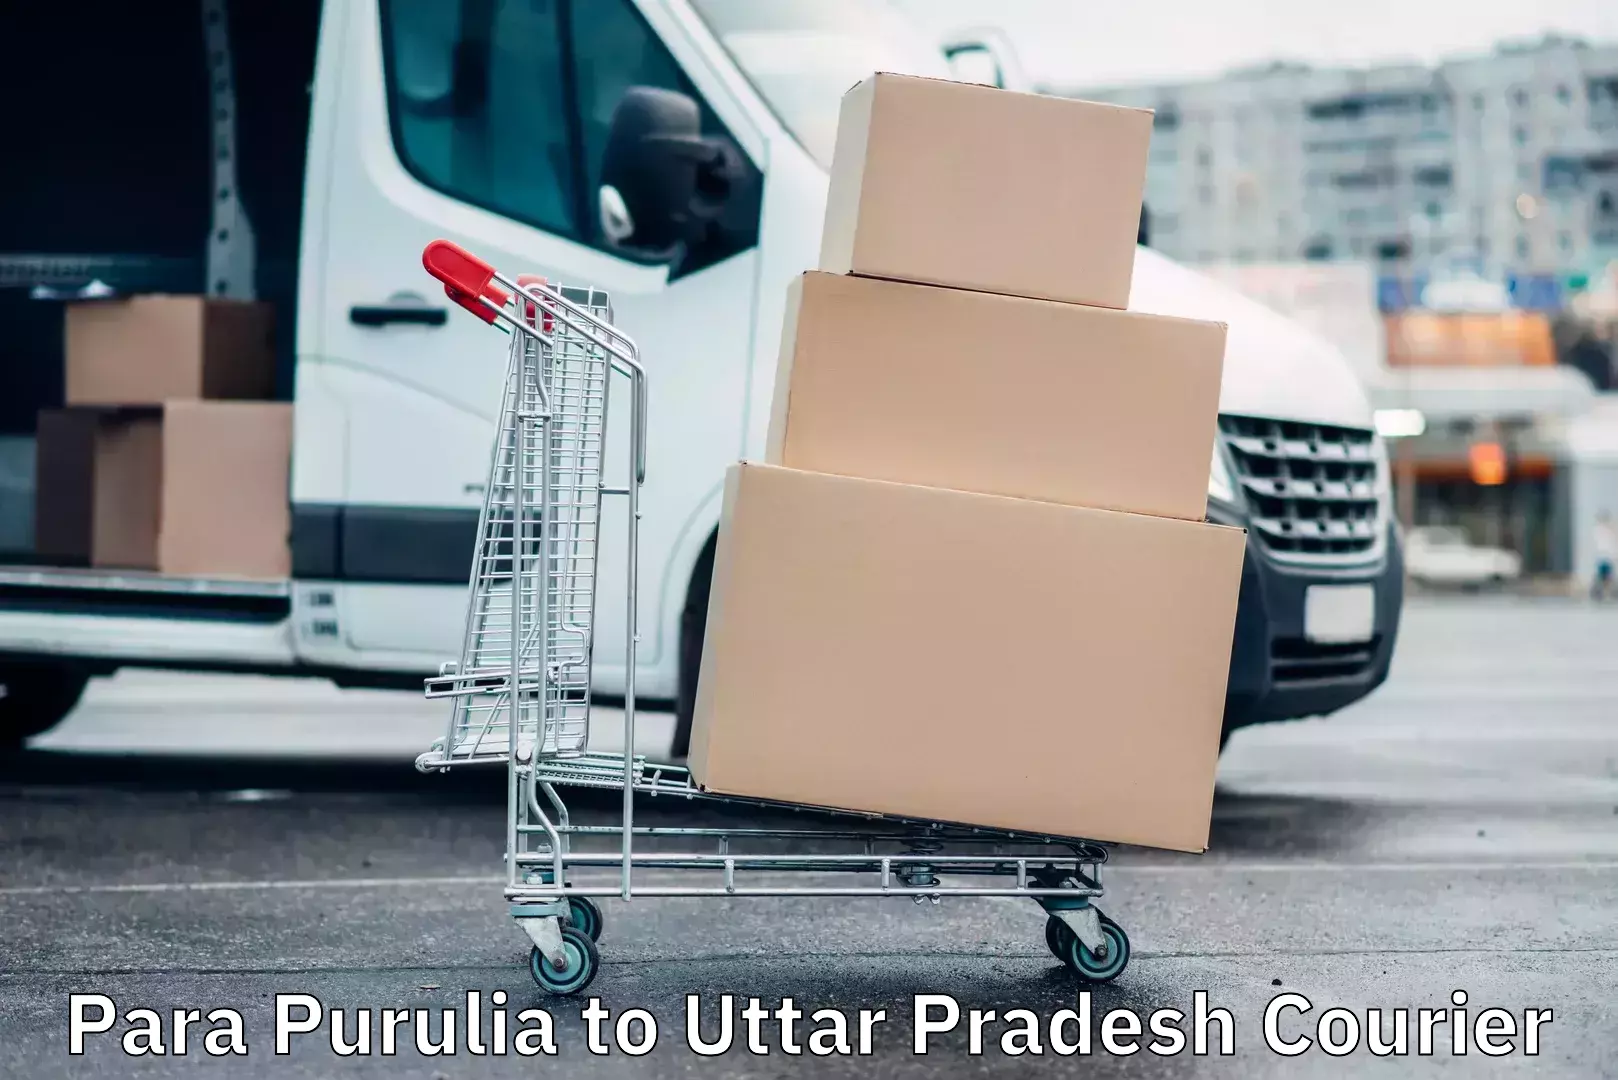 Urgent courier needs Para Purulia to Uttar Pradesh